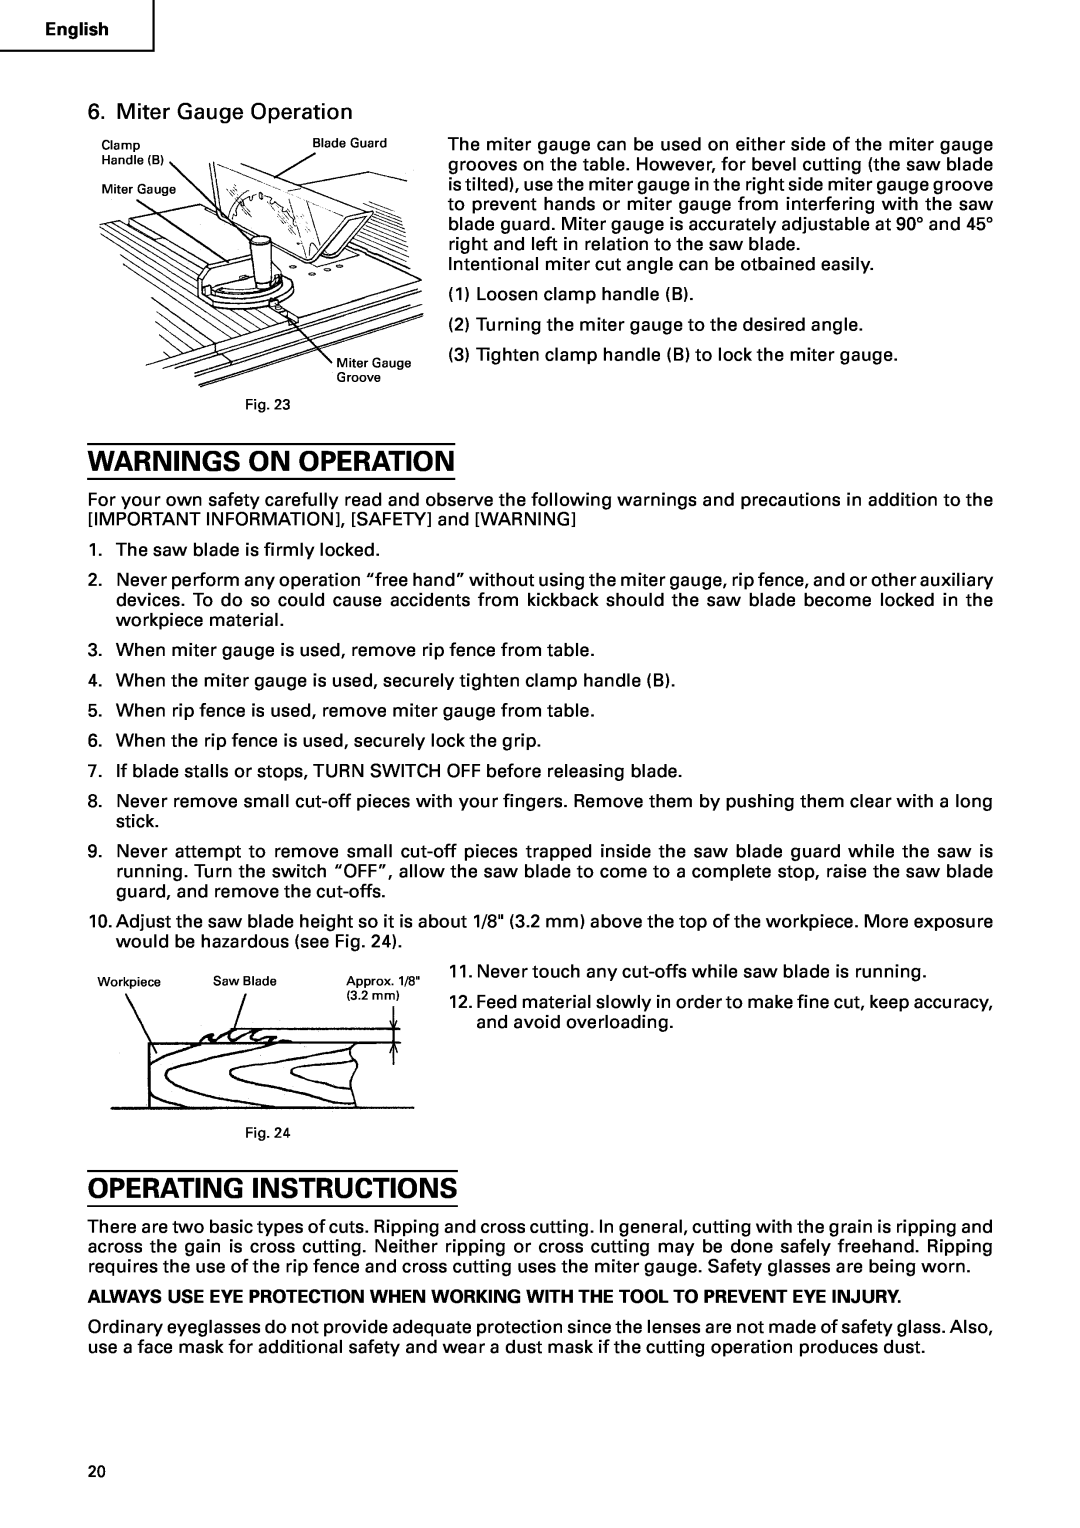 Hitachi C10RA2 instruction manual Warnings On Operation, Operating Instructions, Miter Gauge Operation 